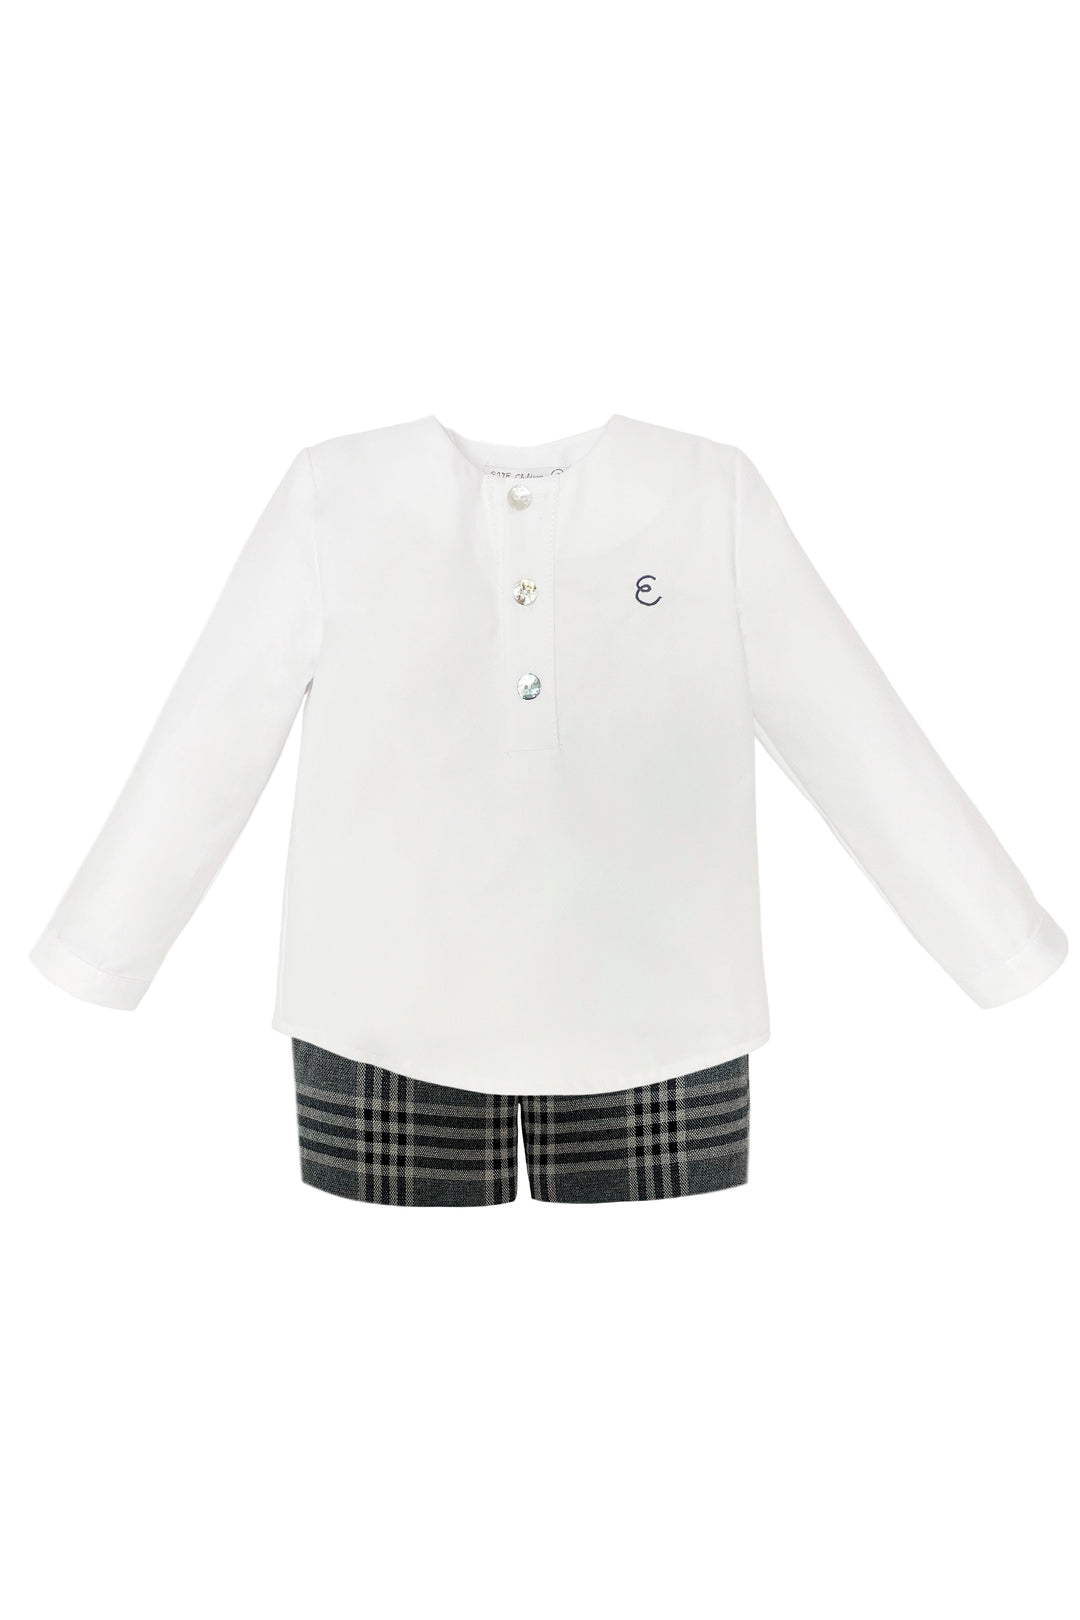 Eve Children "Clement" White Shirt & Grey Tartan Shorts | Millie and John